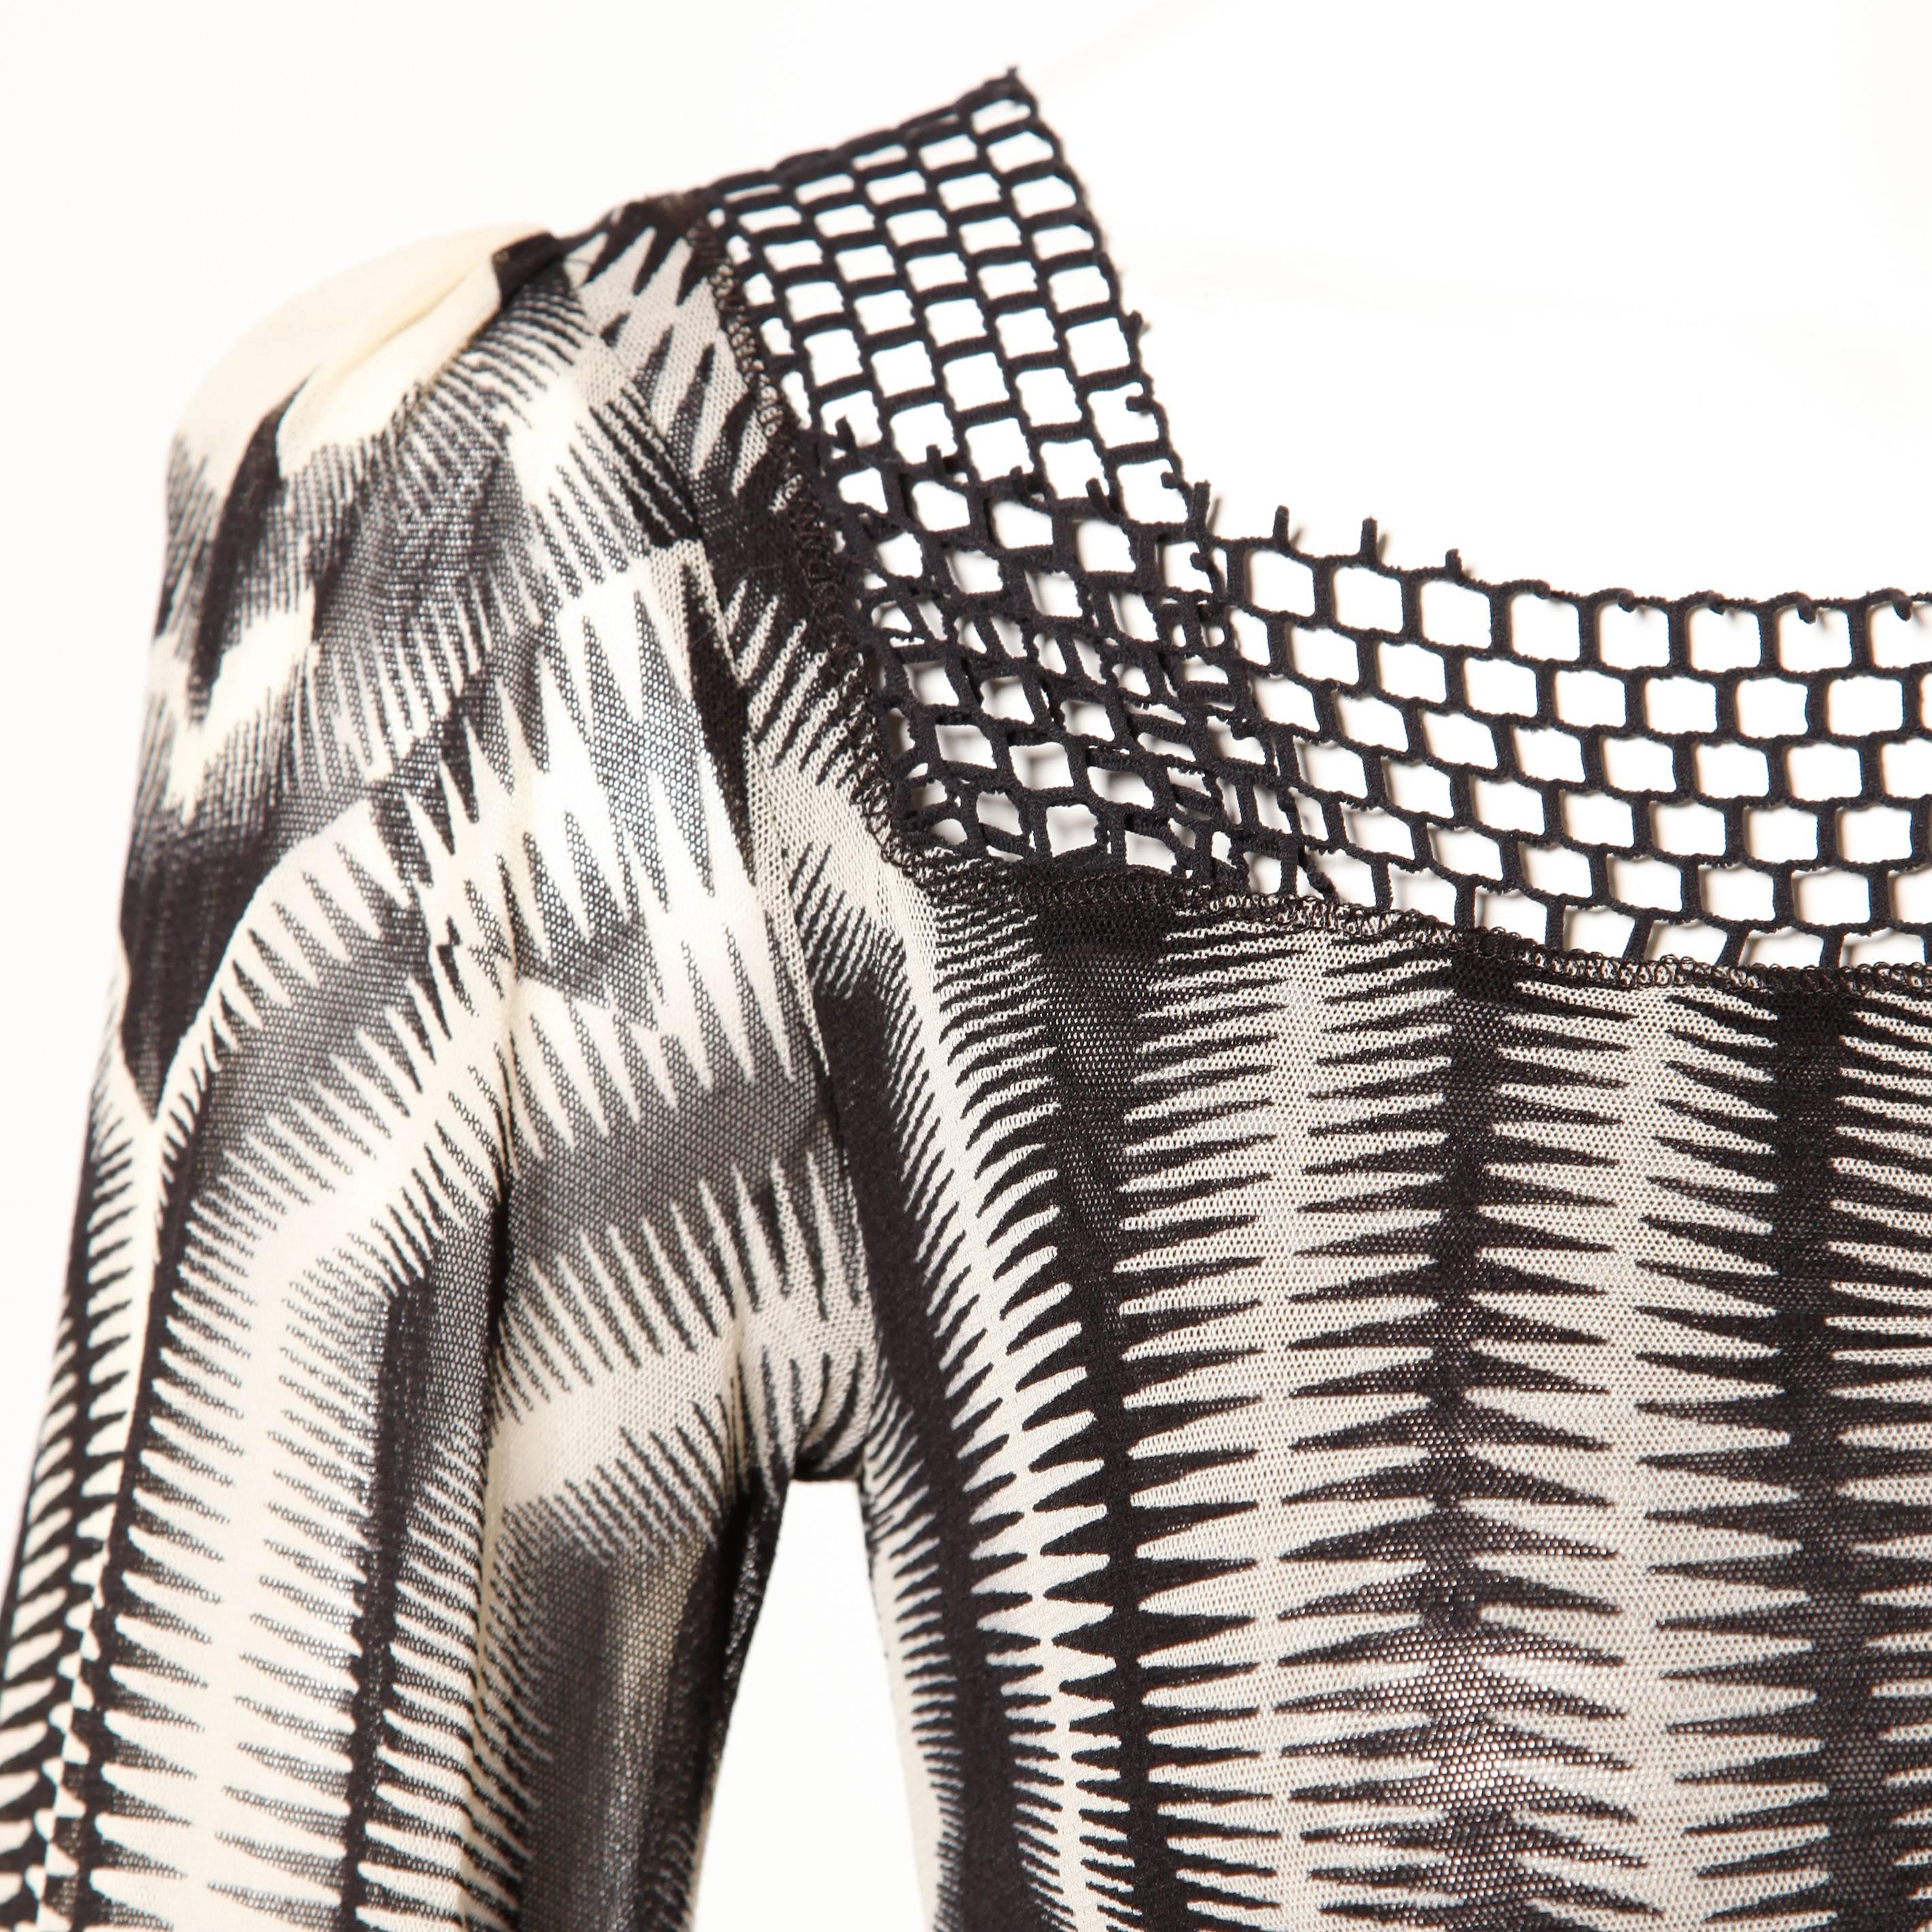 Jean Paul Gaultier Vintage Sheer Mesh Black + White Graphic Op Art Print Dress For Sale 3